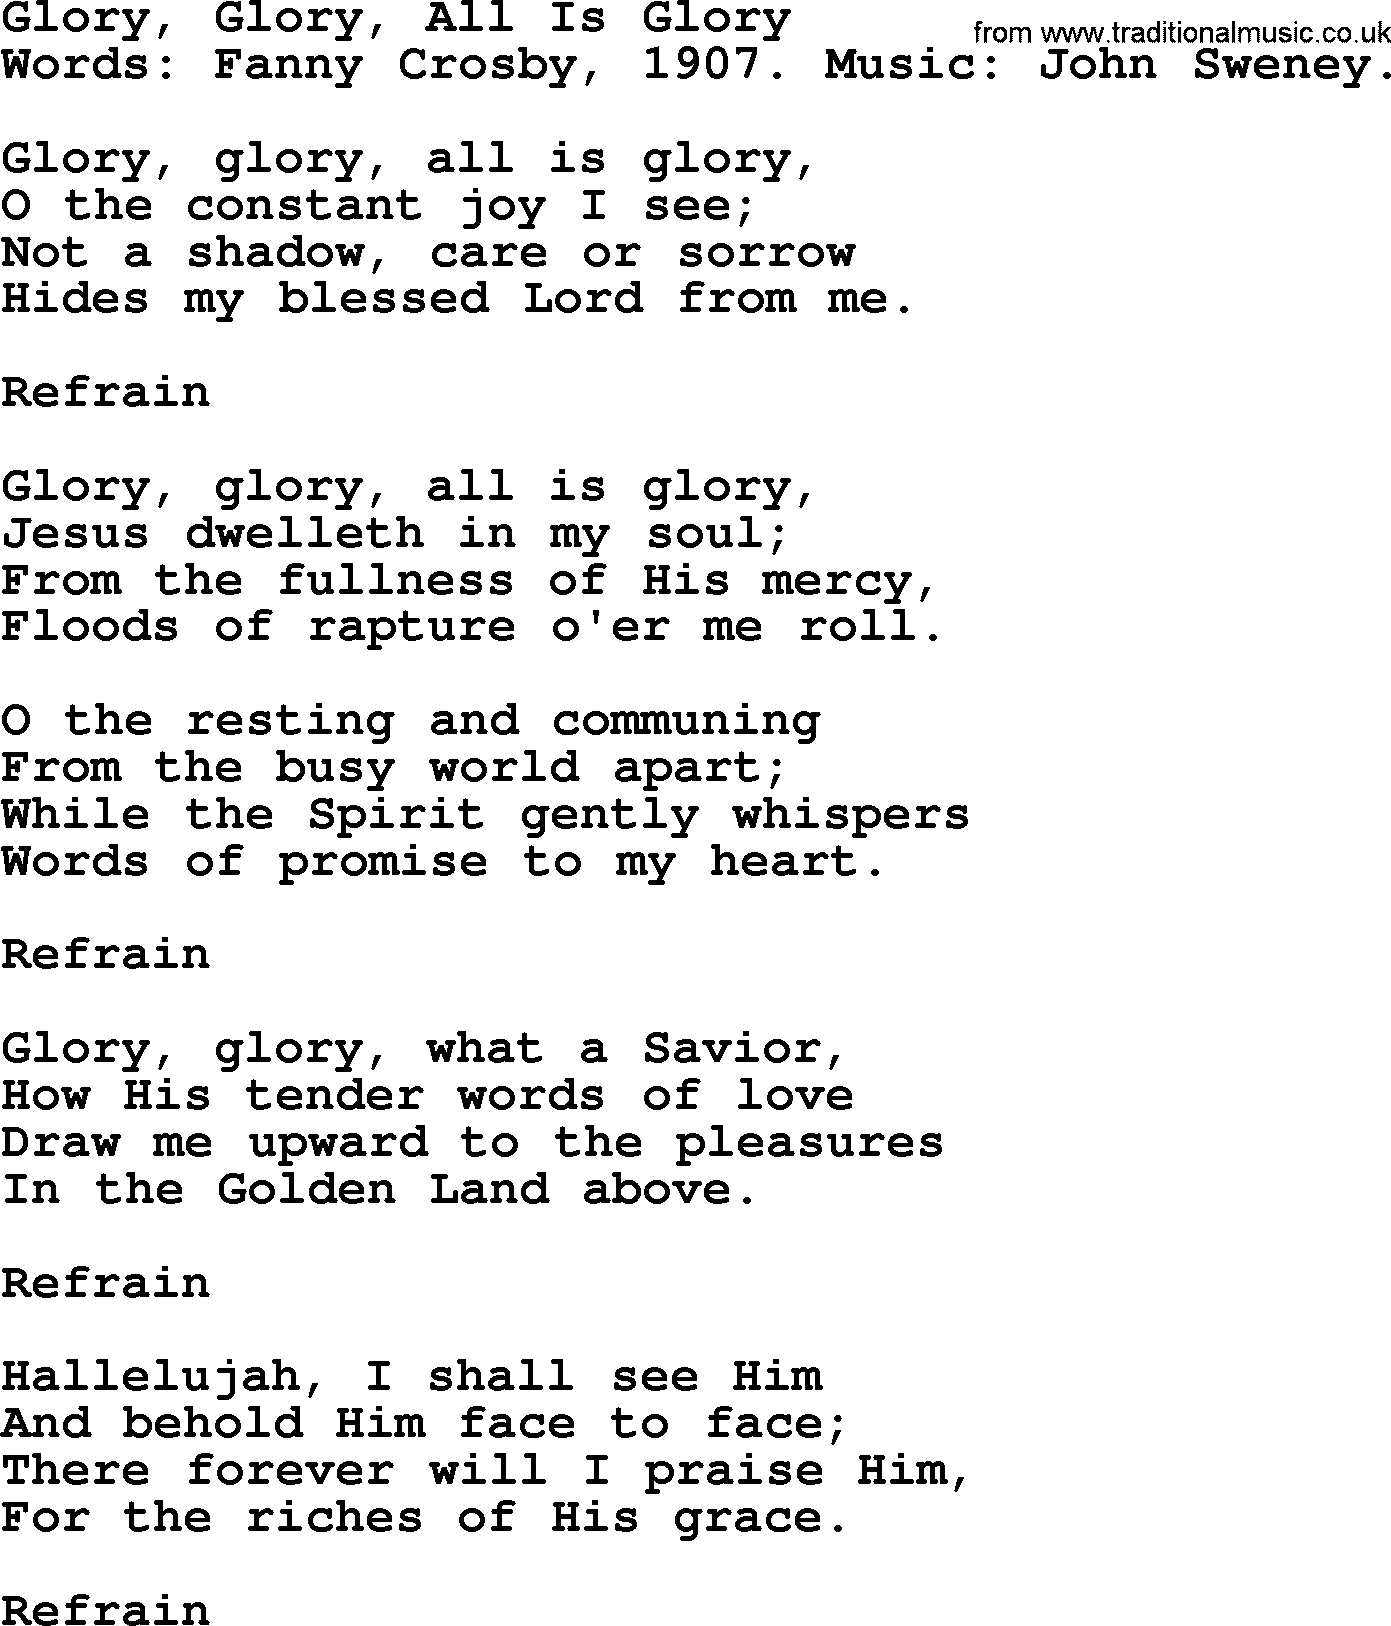 Fanny Crosby song: Glory, Glory, All Is Glory, lyrics